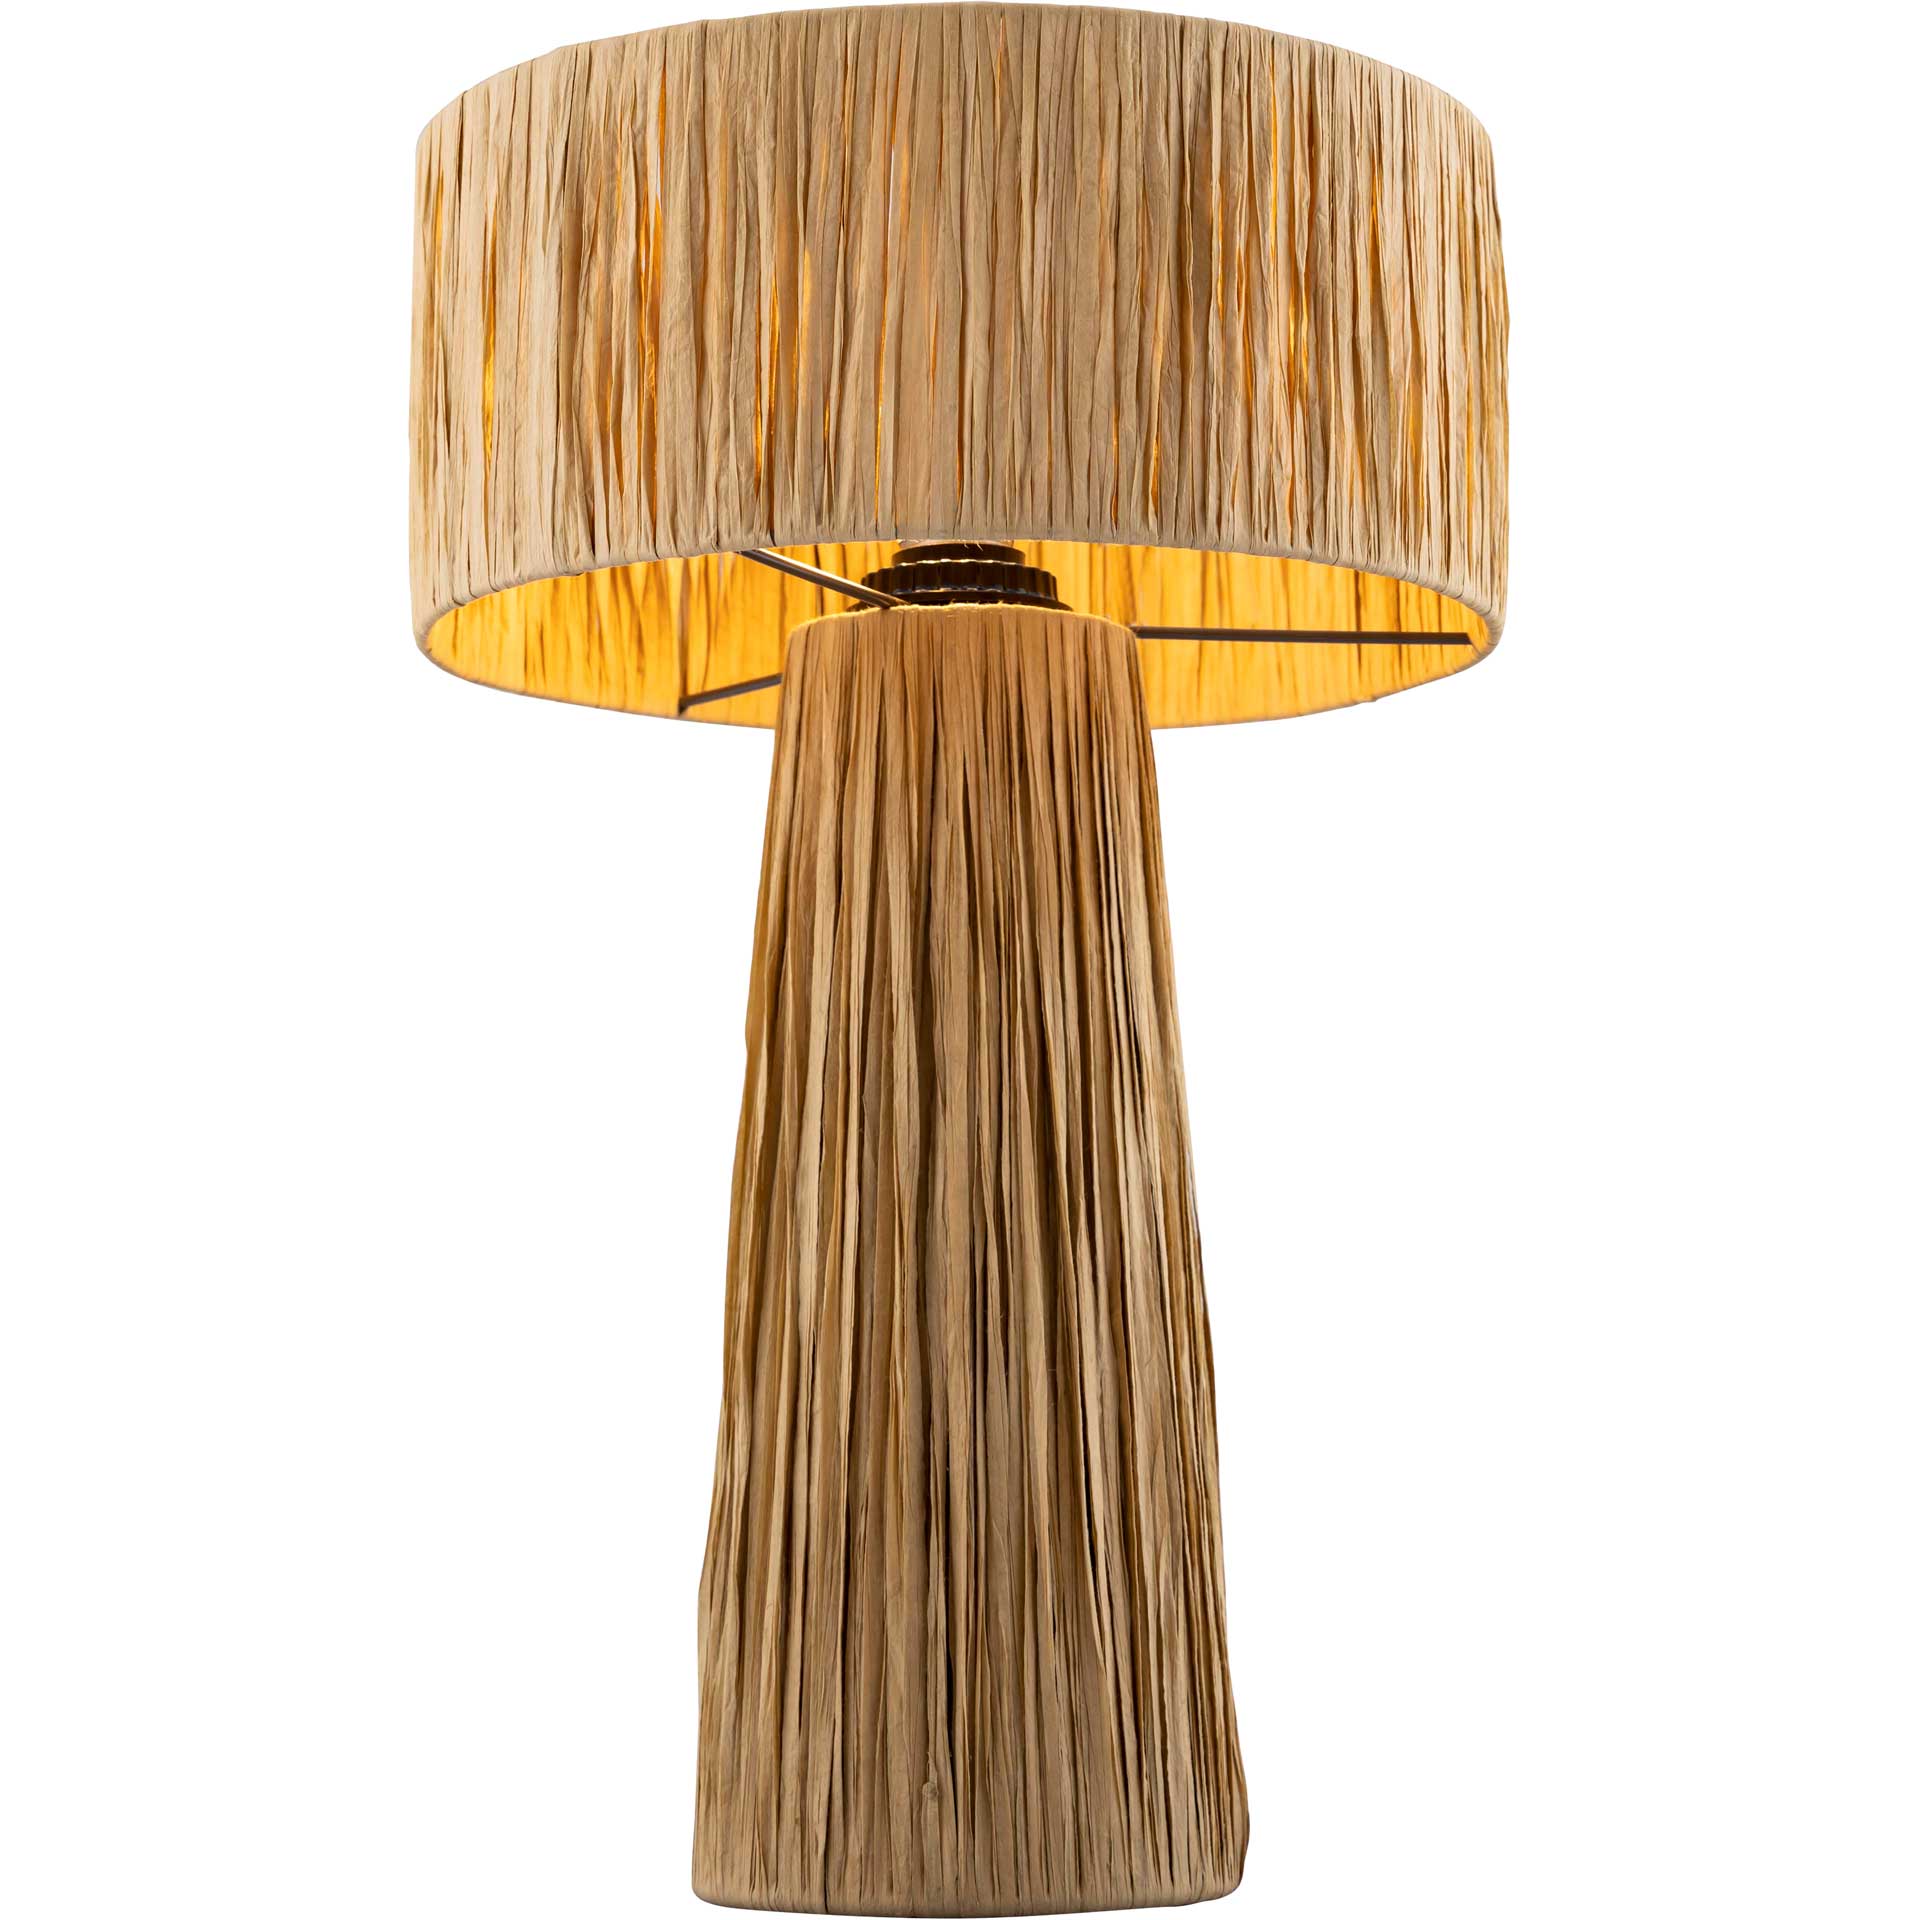 Shannon Rafia Table Lamp Natural